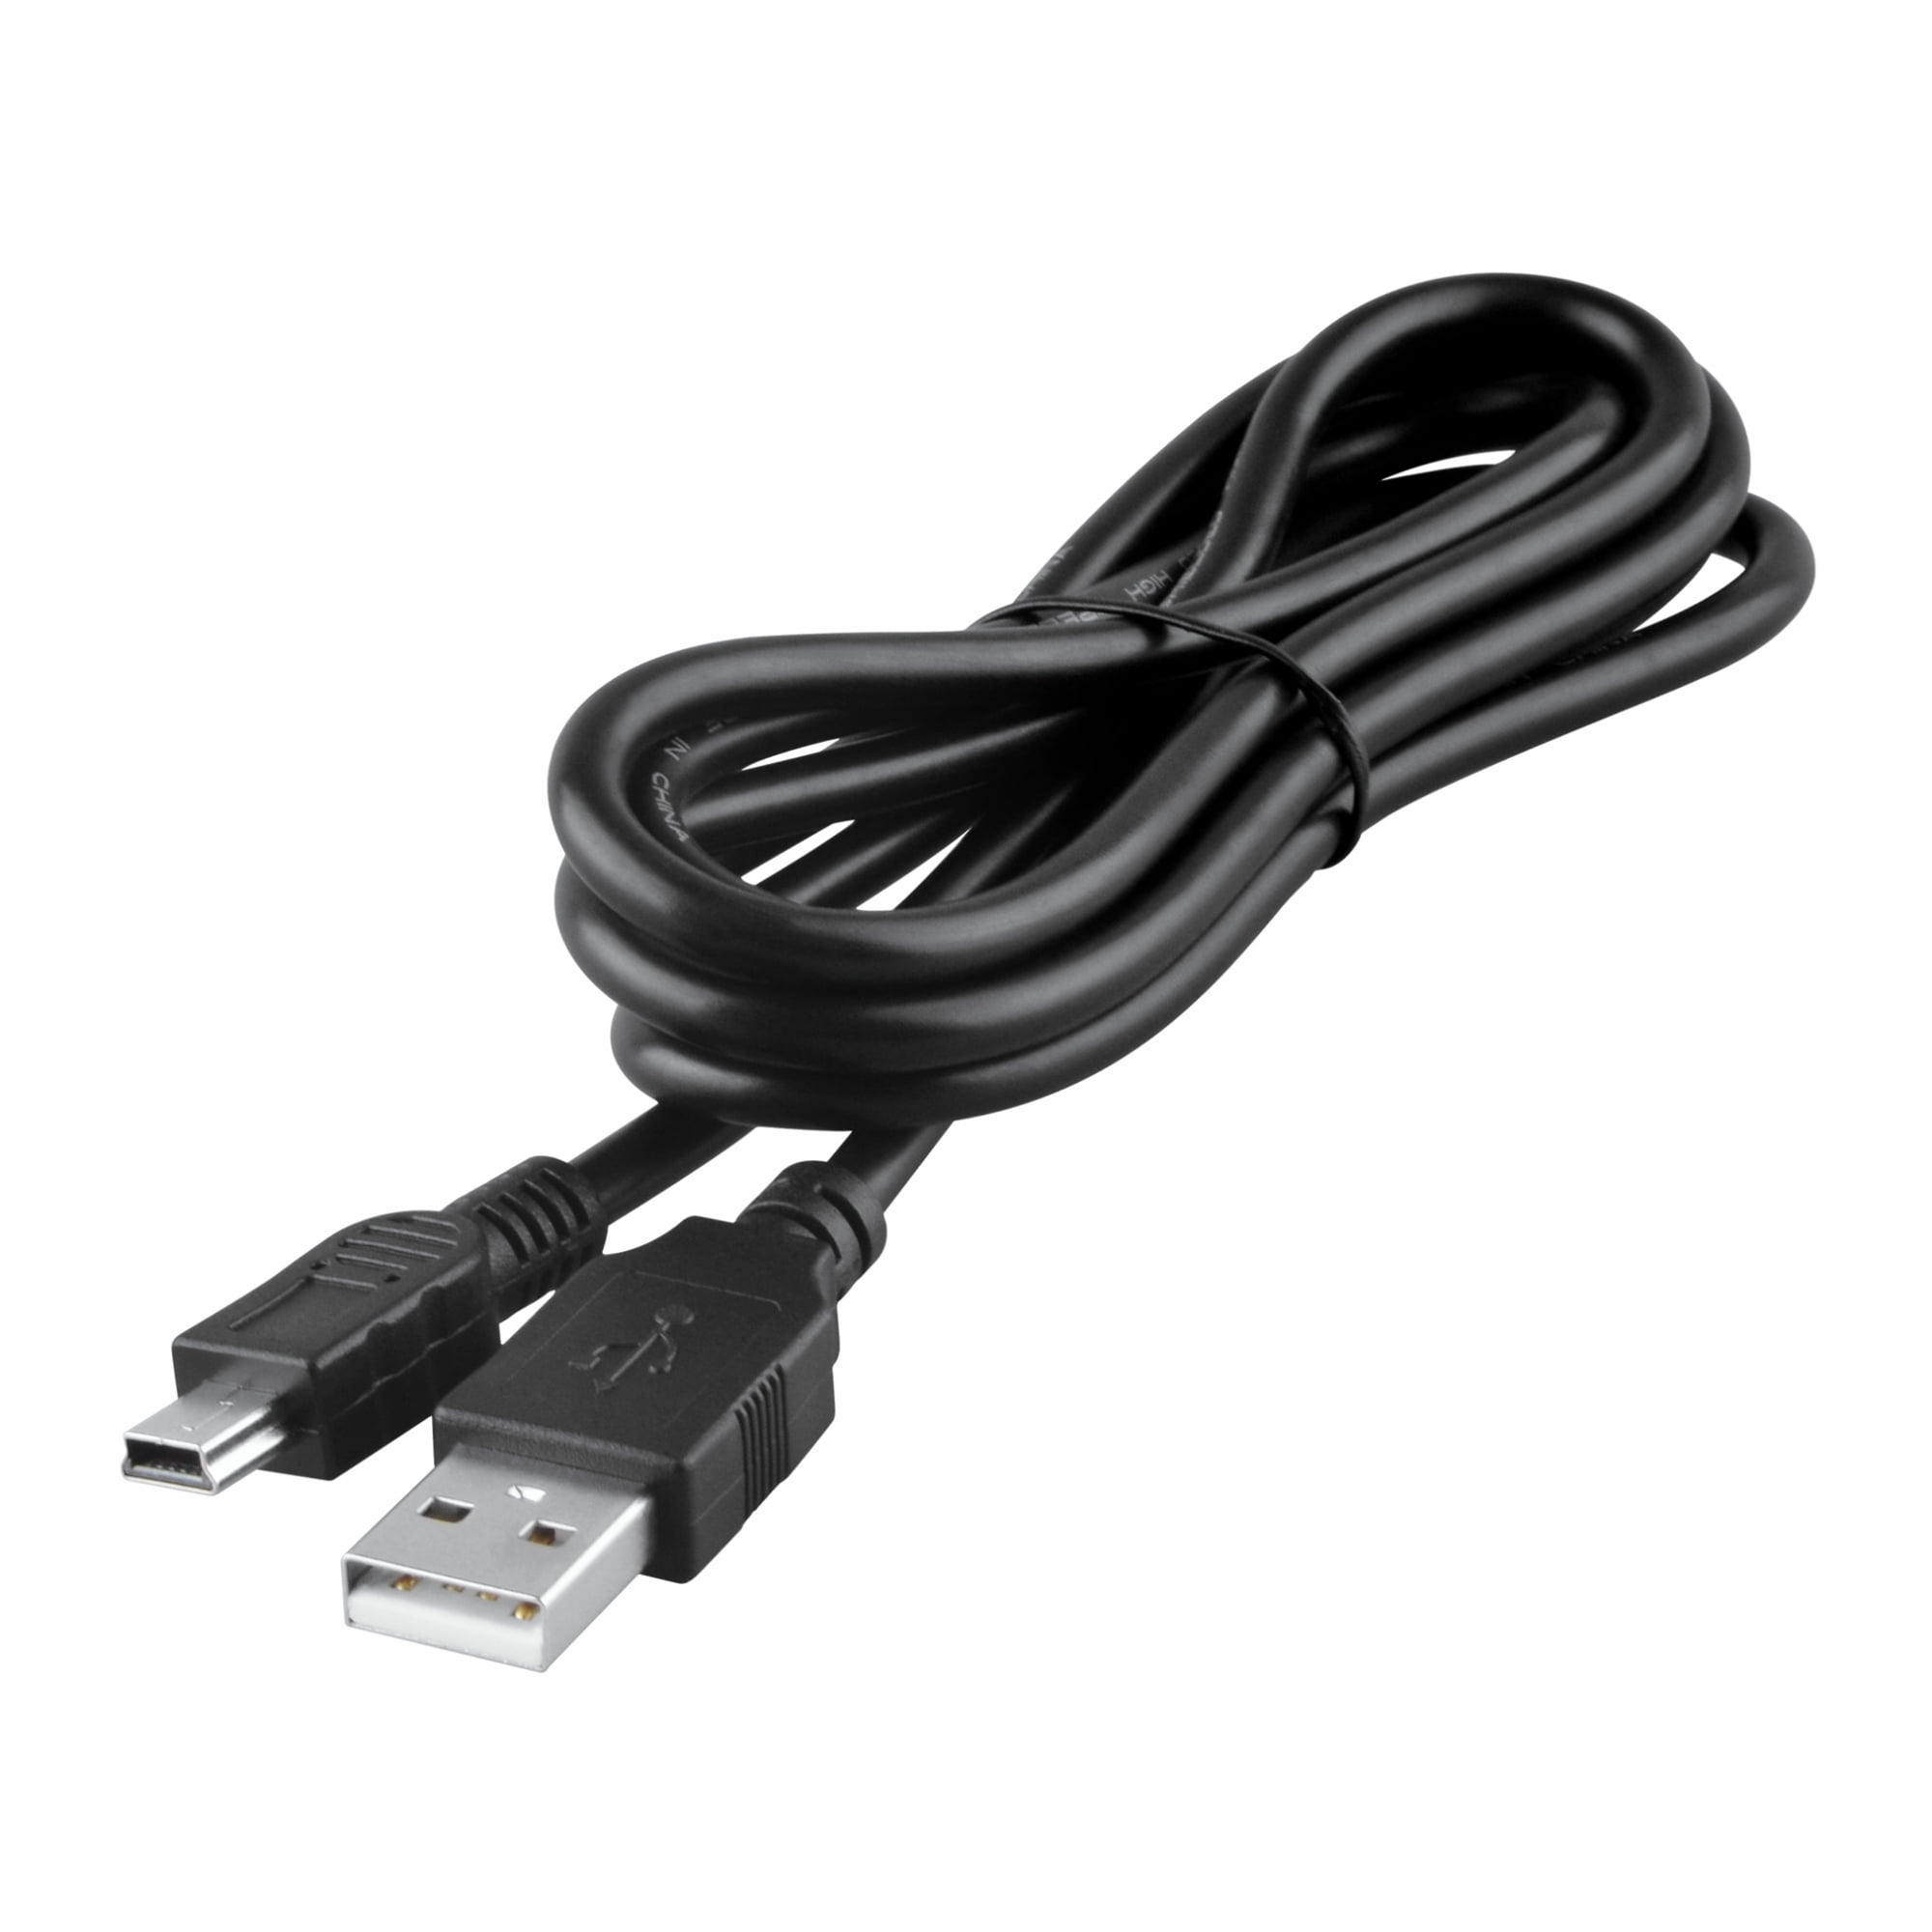 LEAD FOR PC AND MAC SONY  K1HA05CD0014,K1HA05CD0016 CAMERA USB DATA SYNC CABLE 